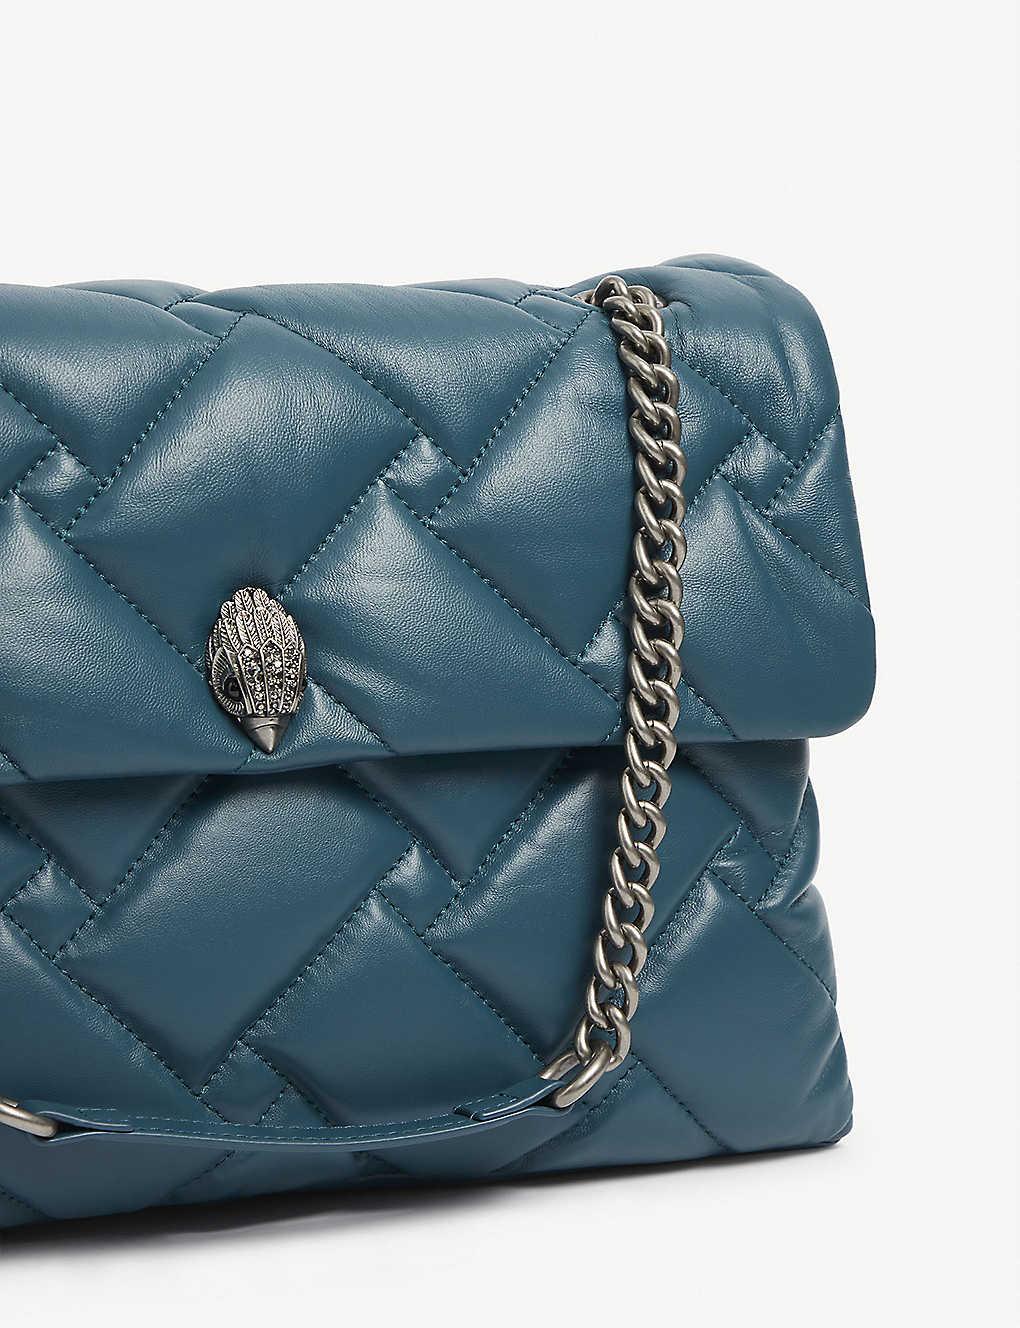 Kurt Geiger Kensington Xxl Leather Shoulder Bag in Blue | Lyst